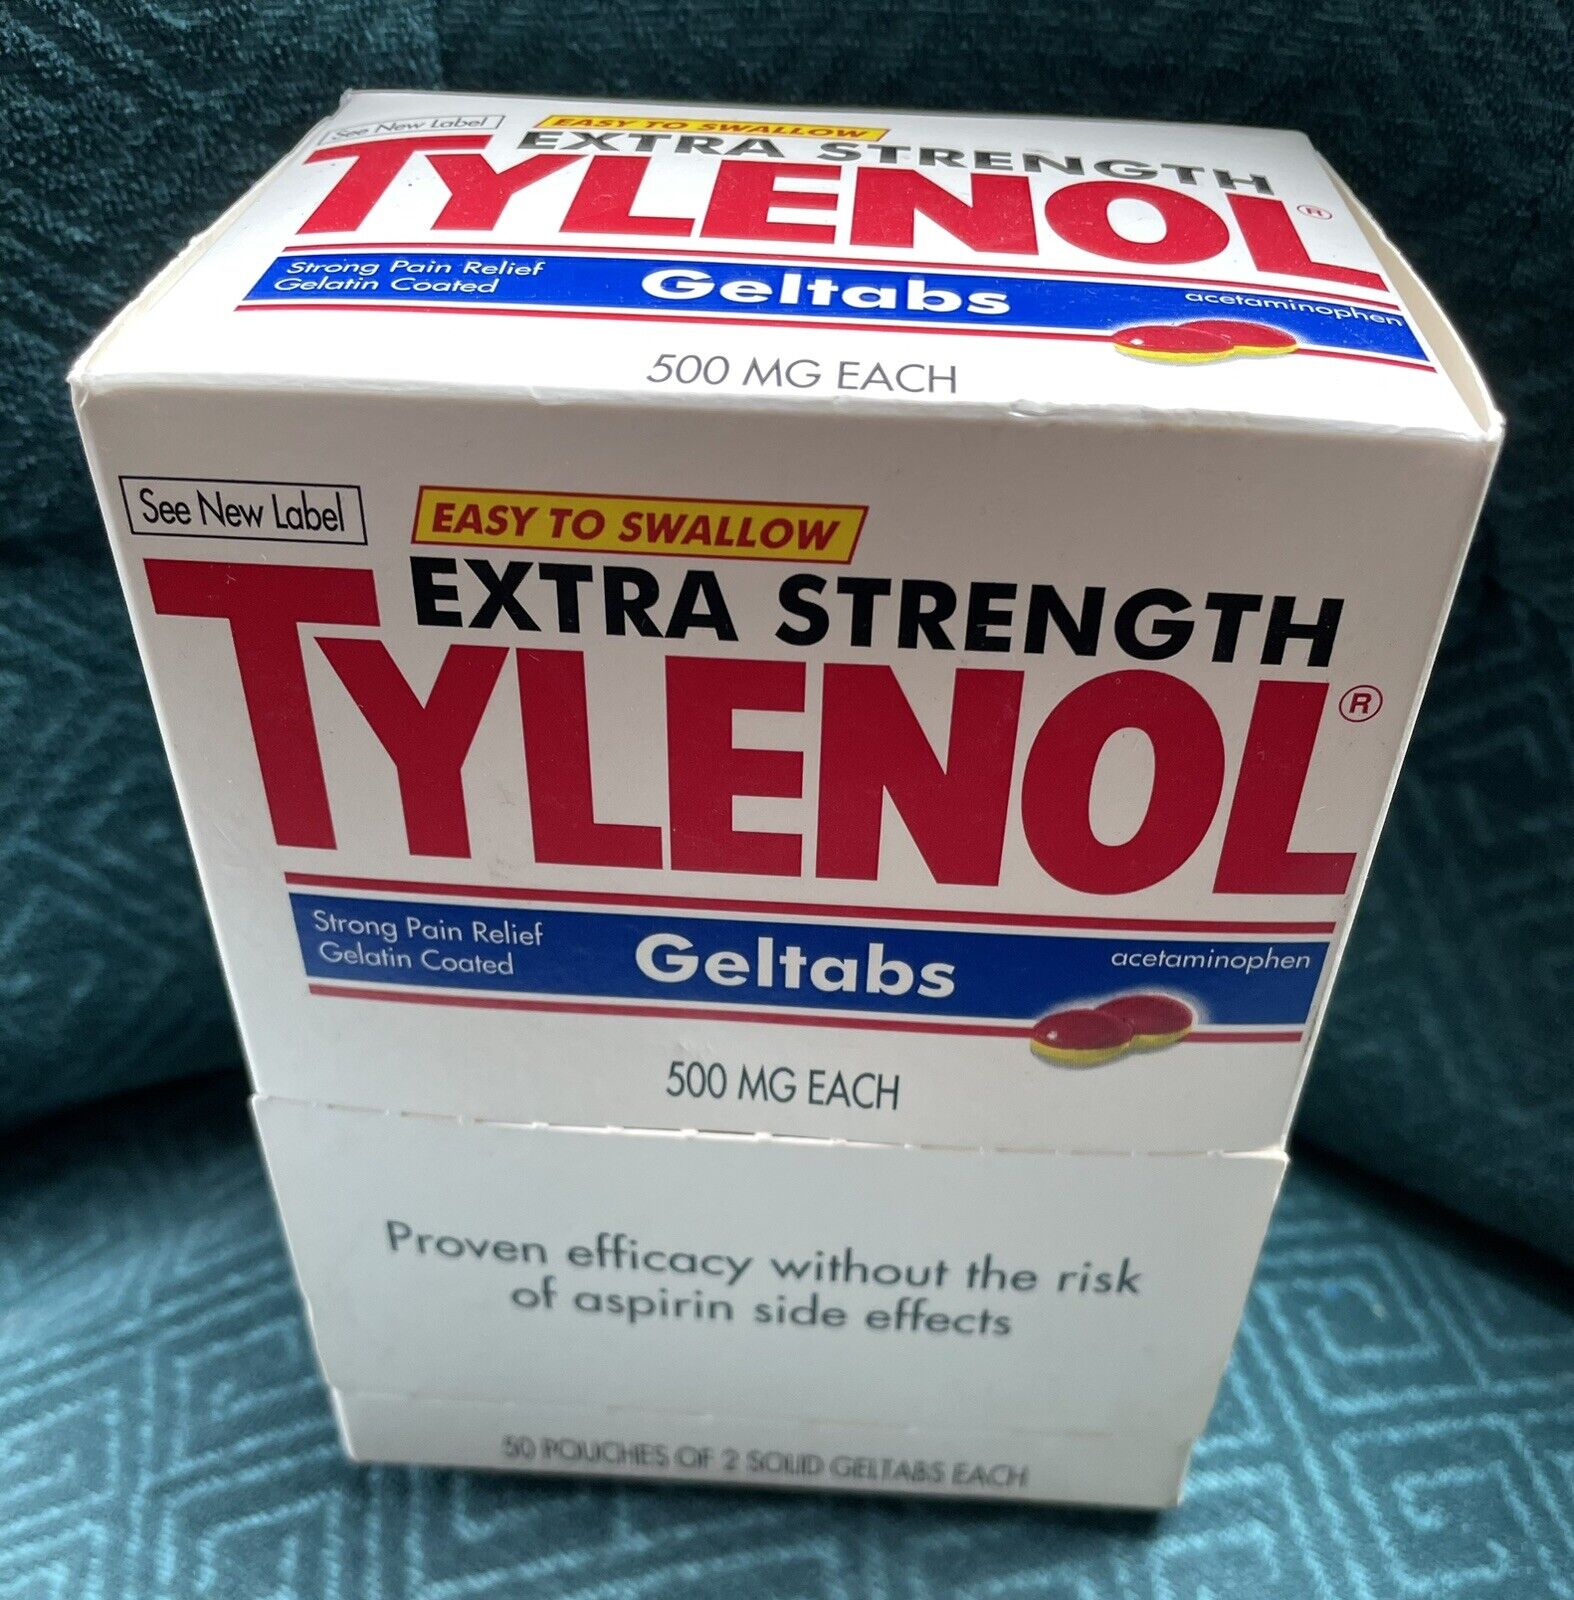 New Vntg Extra-Strength Tylenol Geltabs 500 MG EACH, 50 Pouches Box C. 1998 Prop